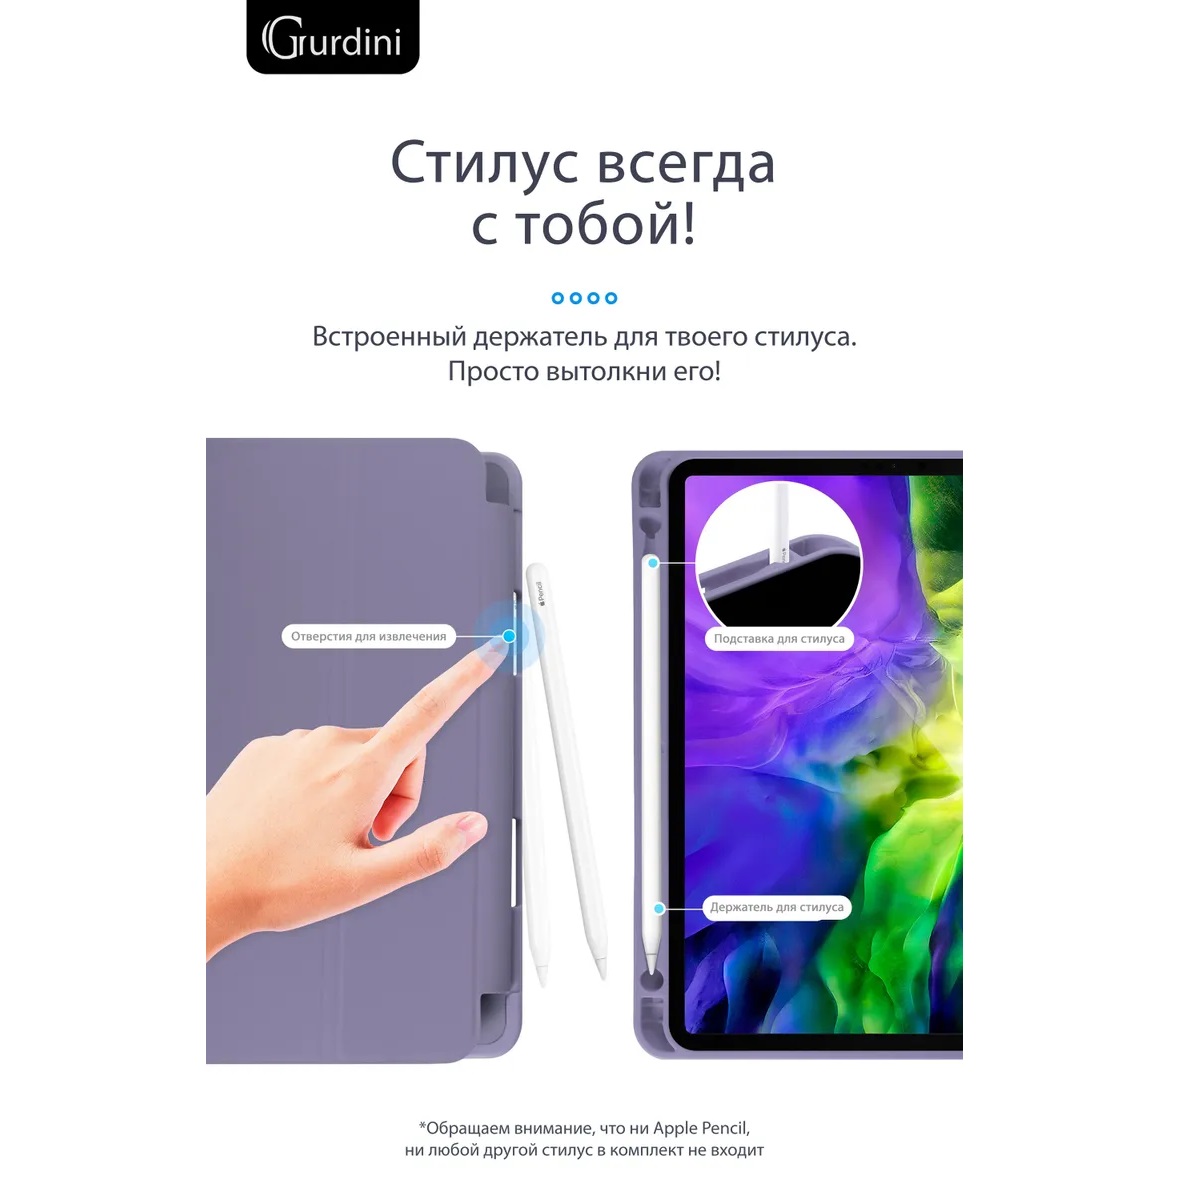 Чехол-книжка Gurdini Milano Series (pen slot) для iPad Air 10.9 Lavender